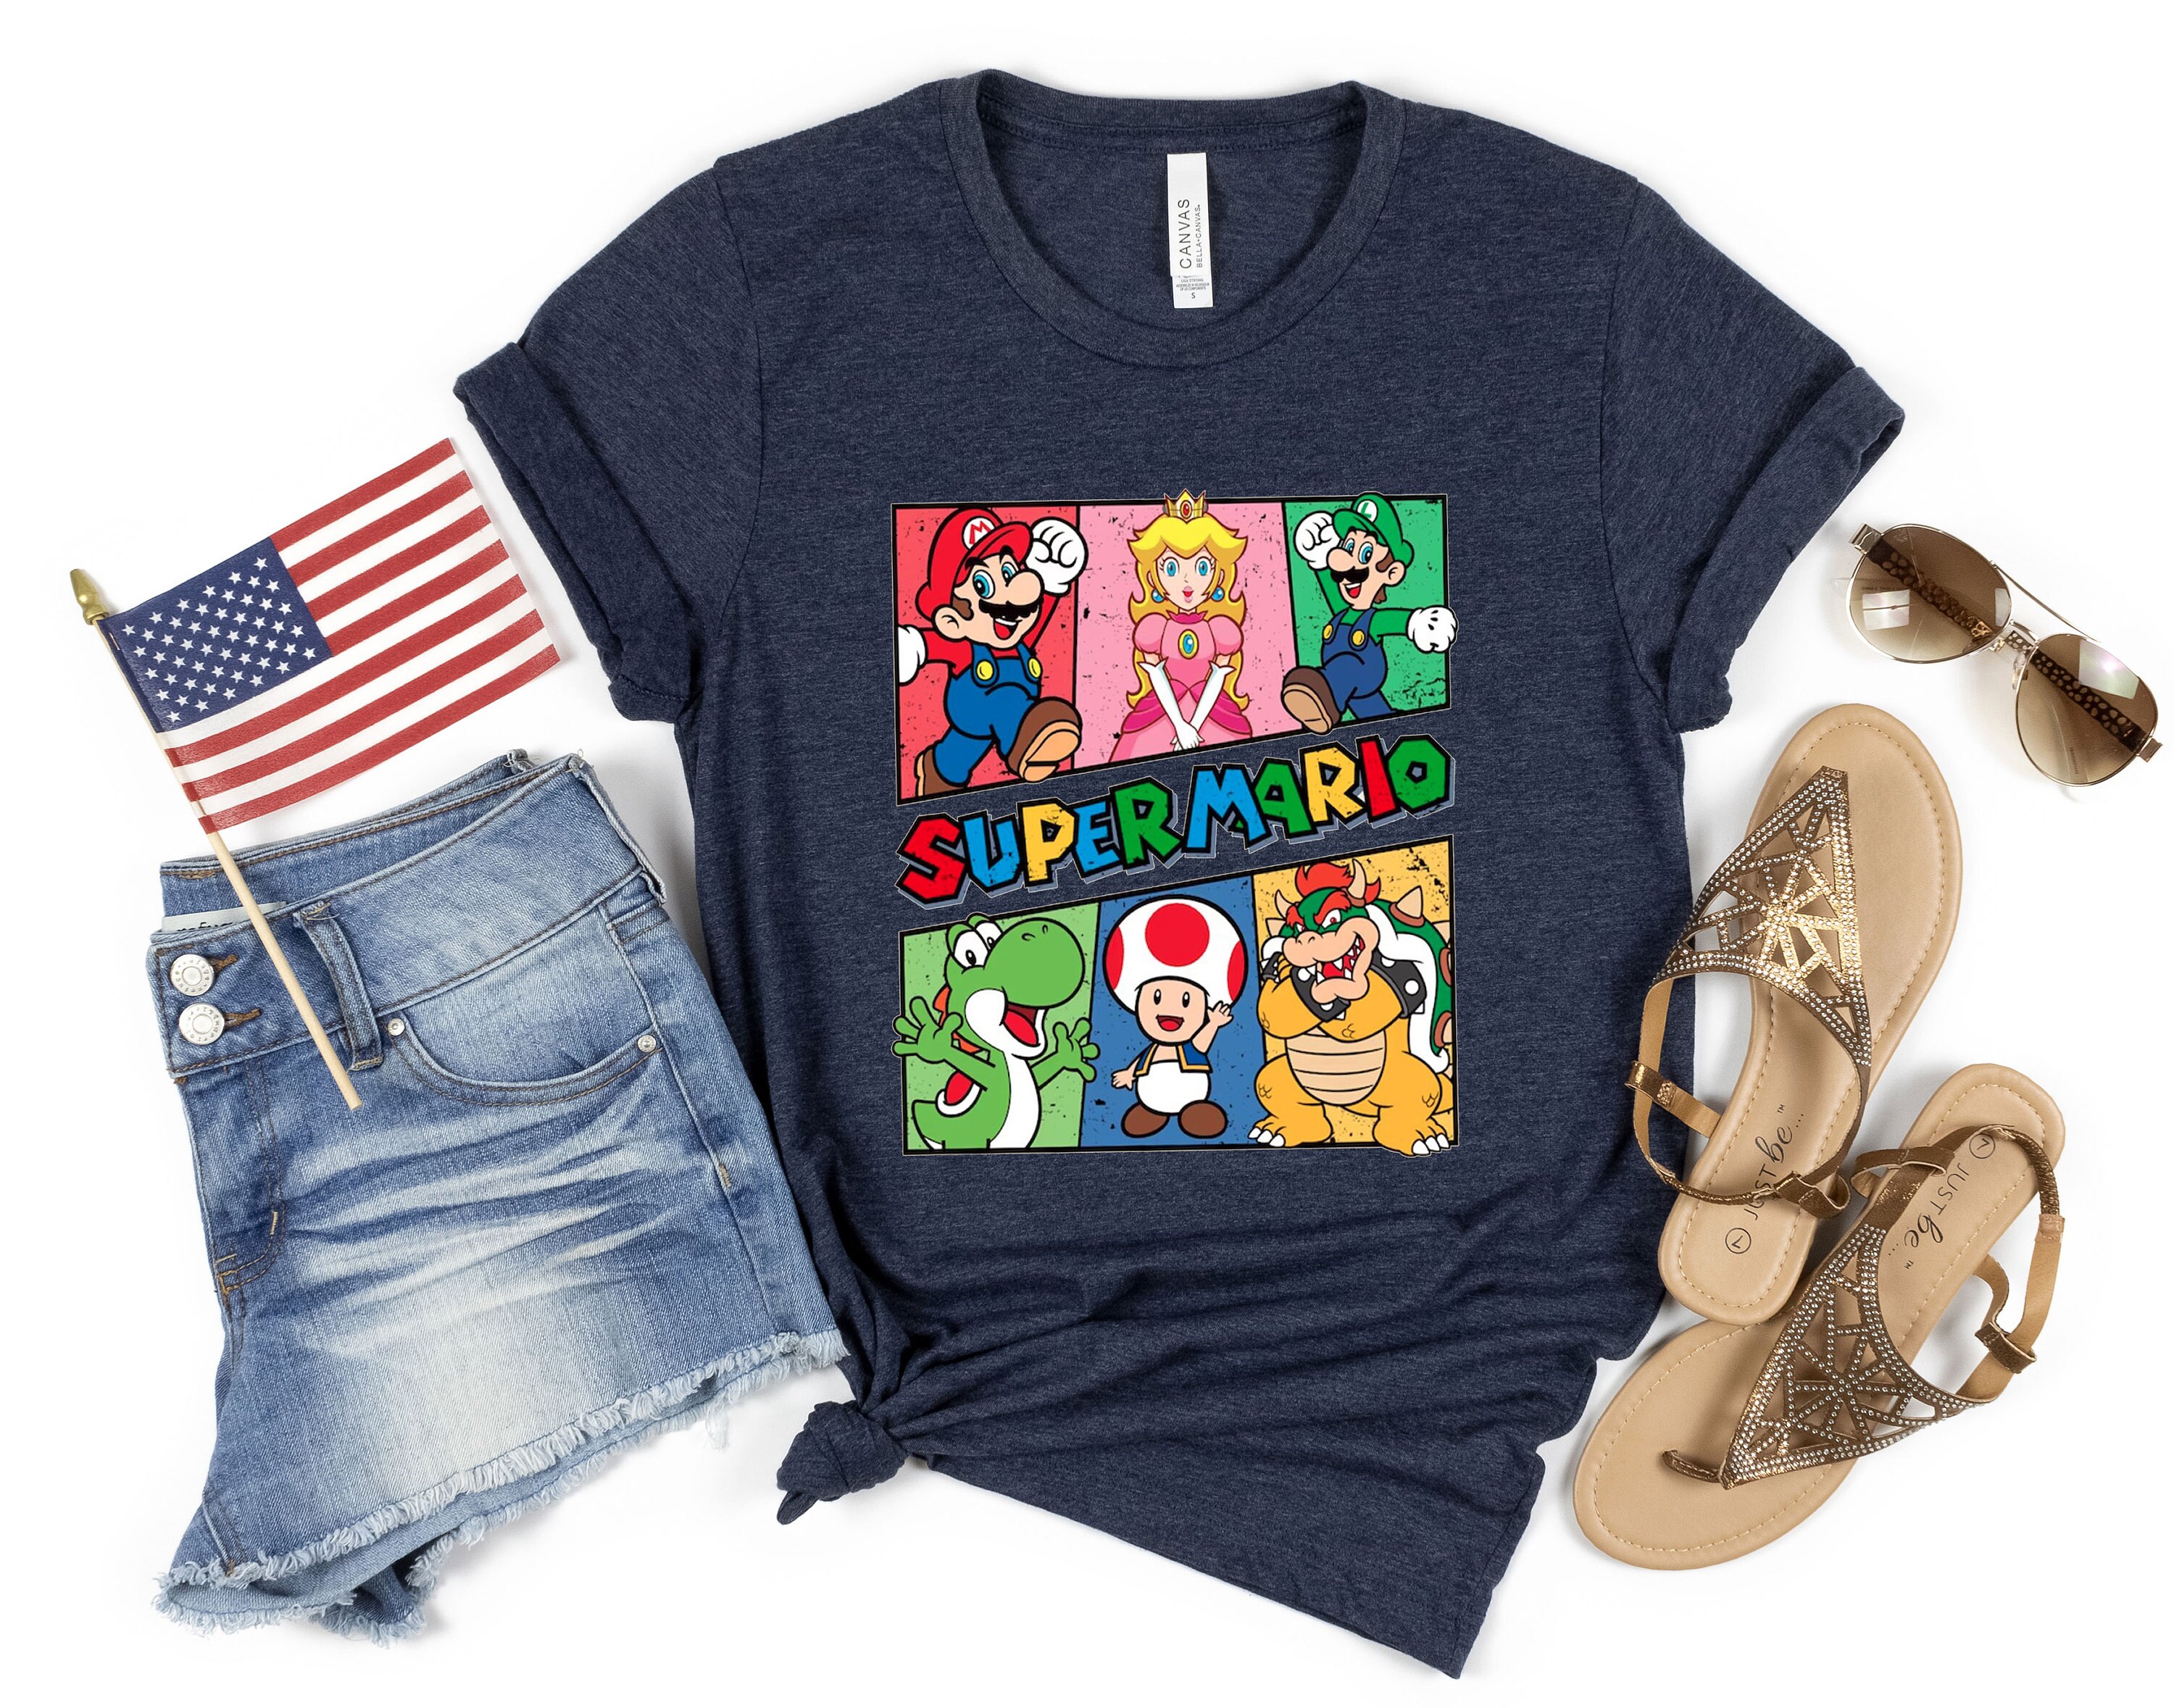 Cute Supermario T-shirt Princess Peach Shirt Mario and Luigi - Etsy